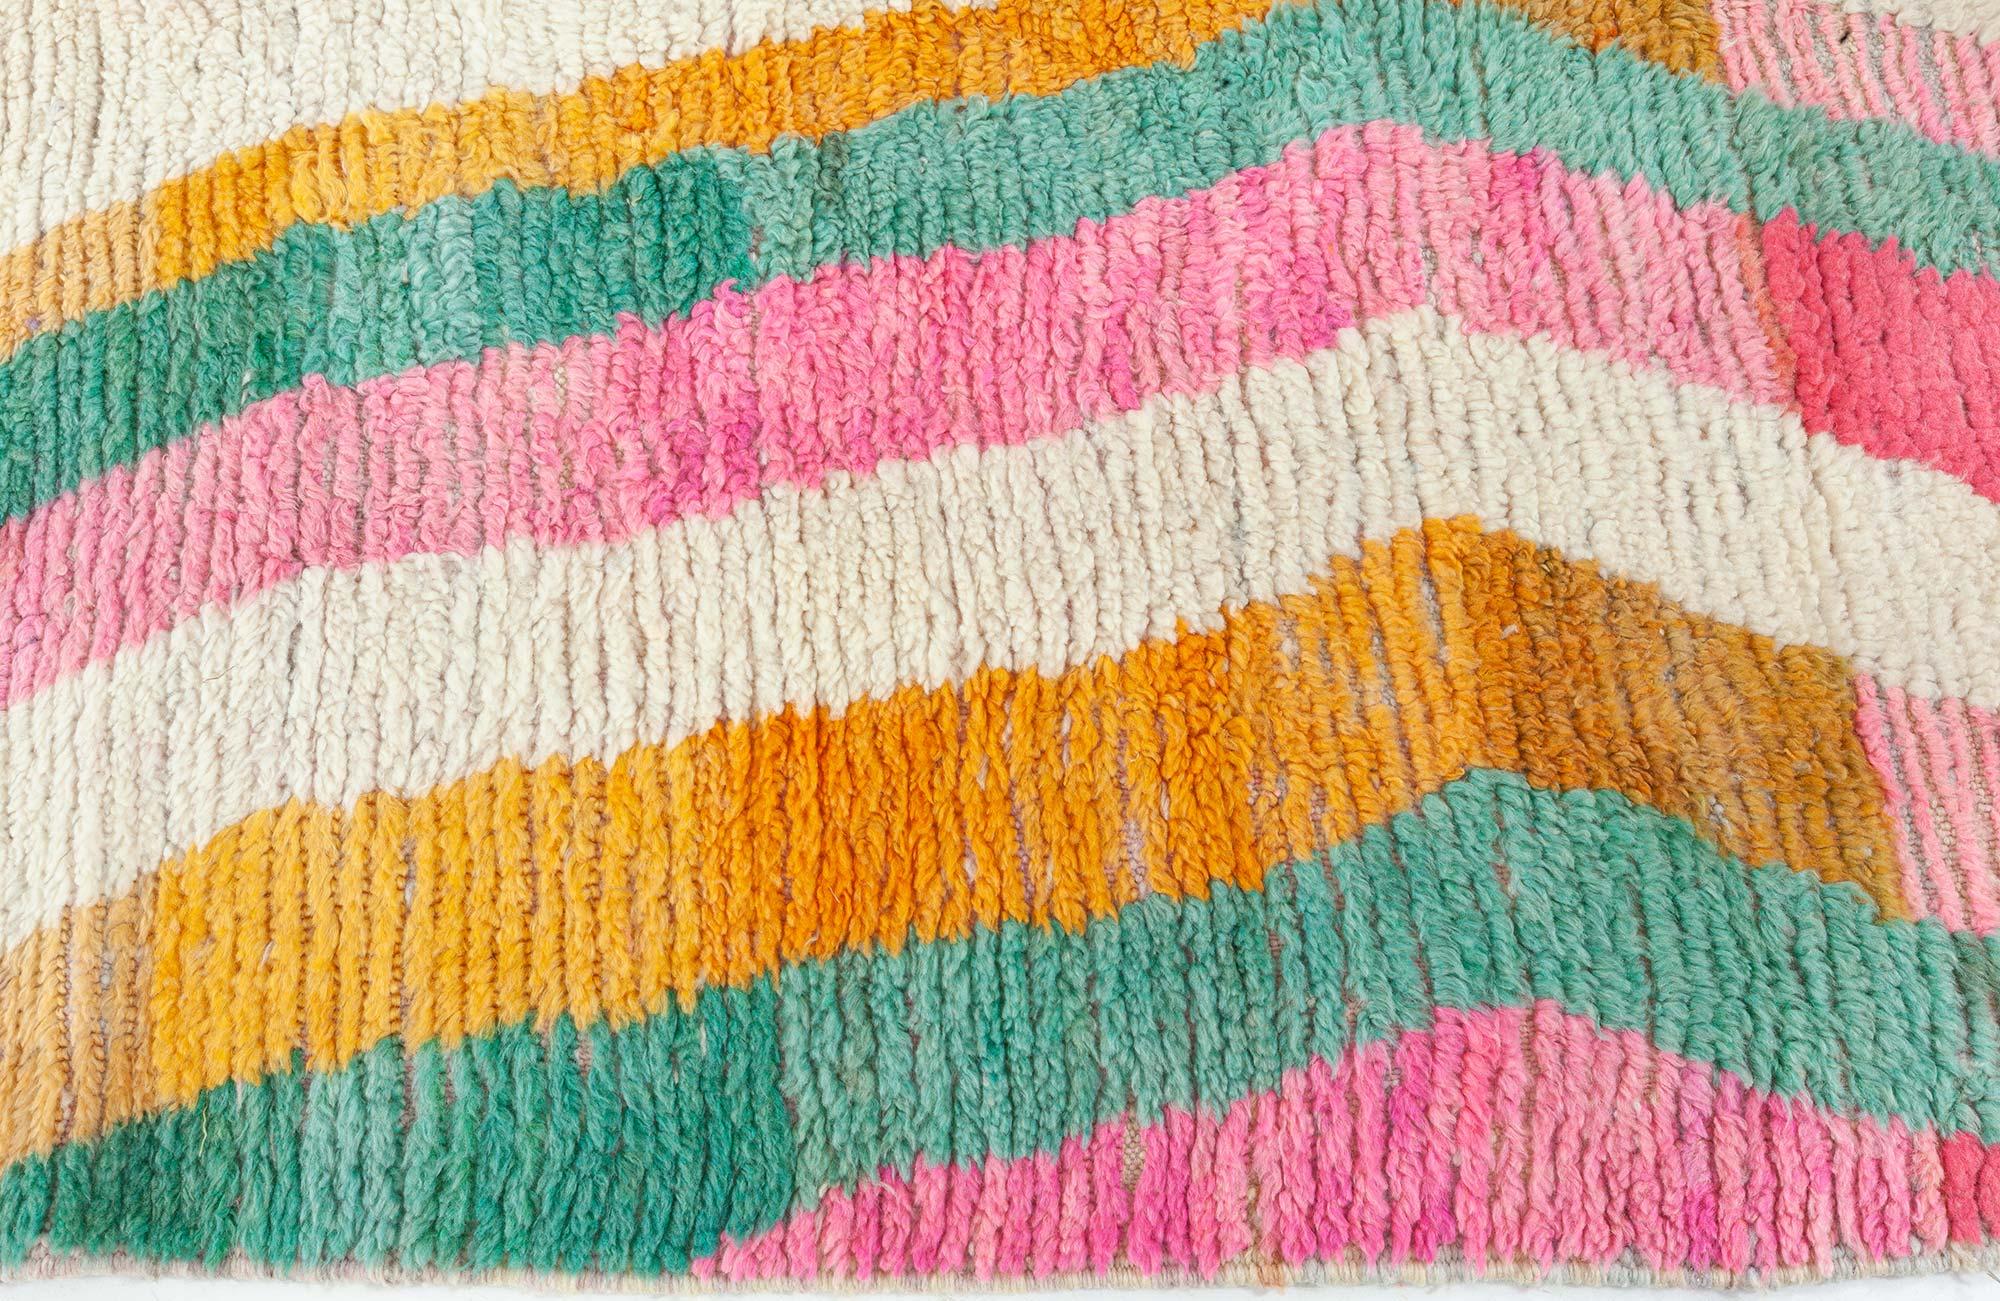 Modern Moroccan abstract handmade wool rug by Doris Leslie Blau.
Size: 5'4